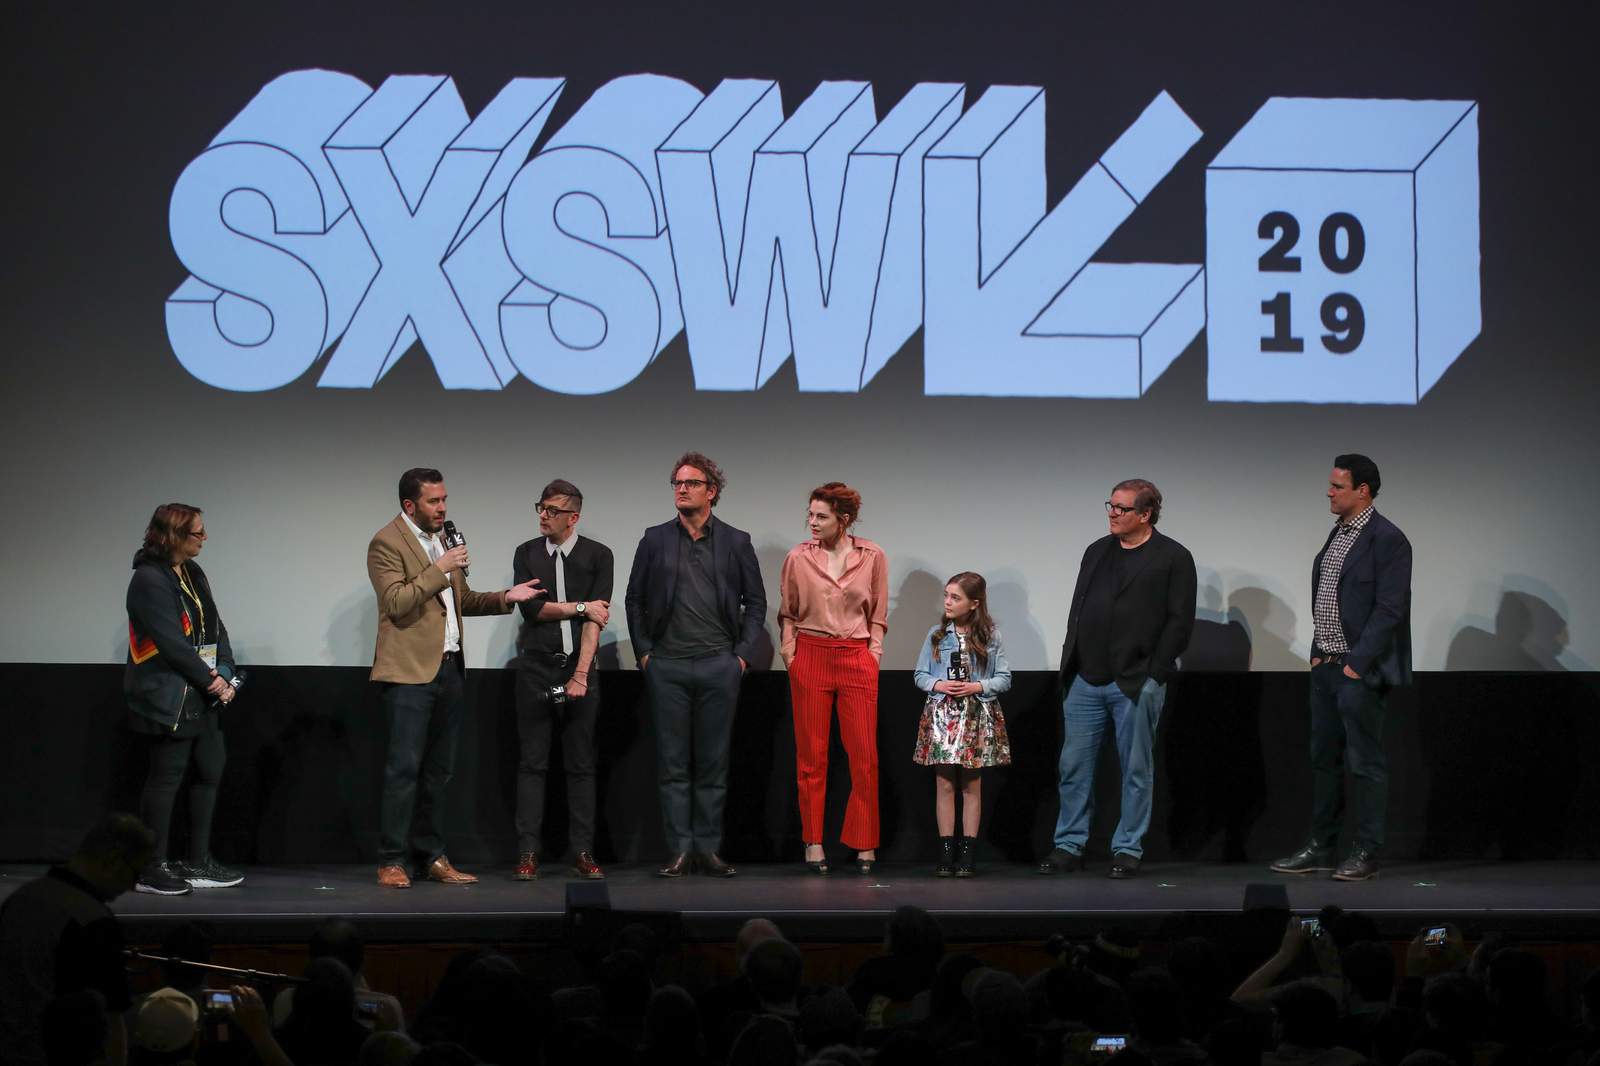 Stream SXSW 2020 film festival on Amazon Prime